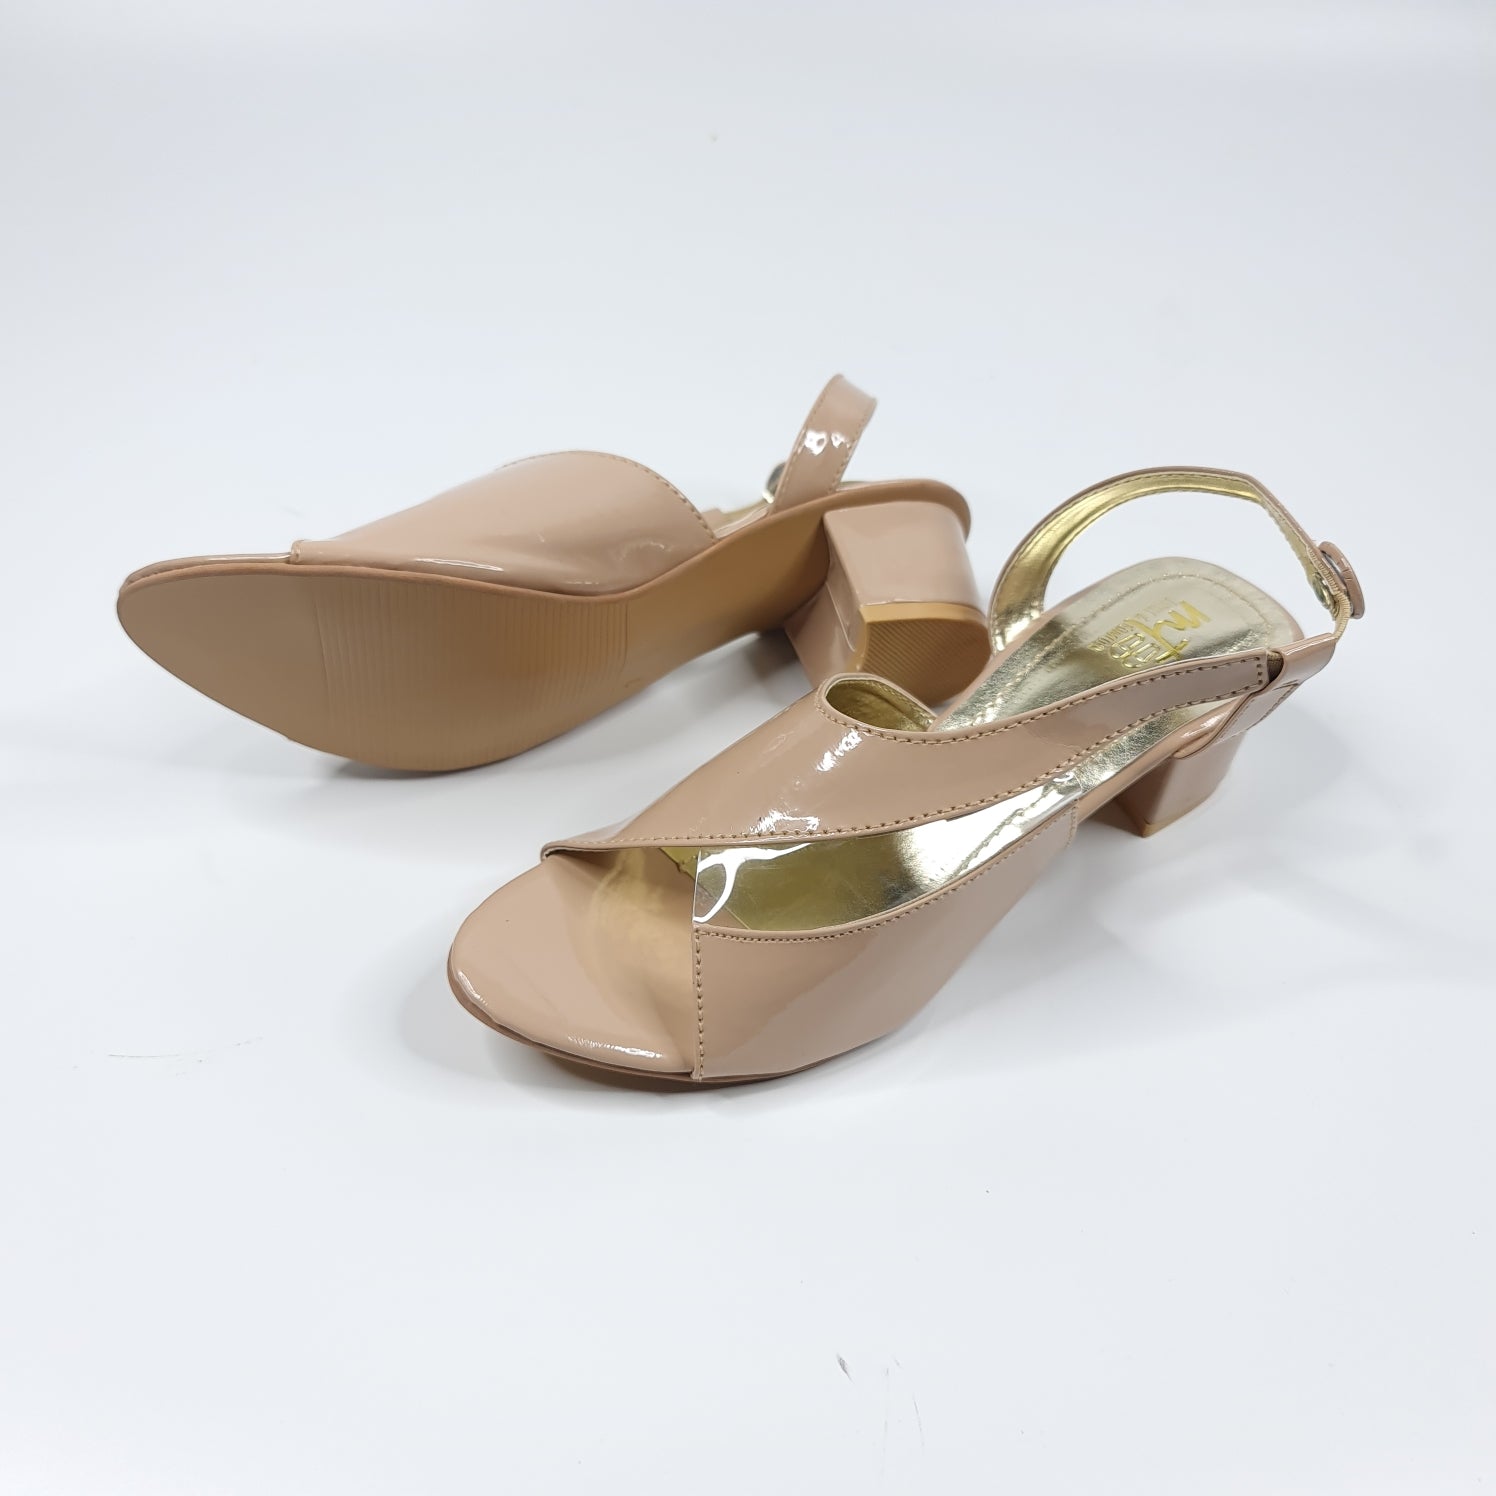 Patent & Transparent peep toes - Maha fashions -  Block Heels